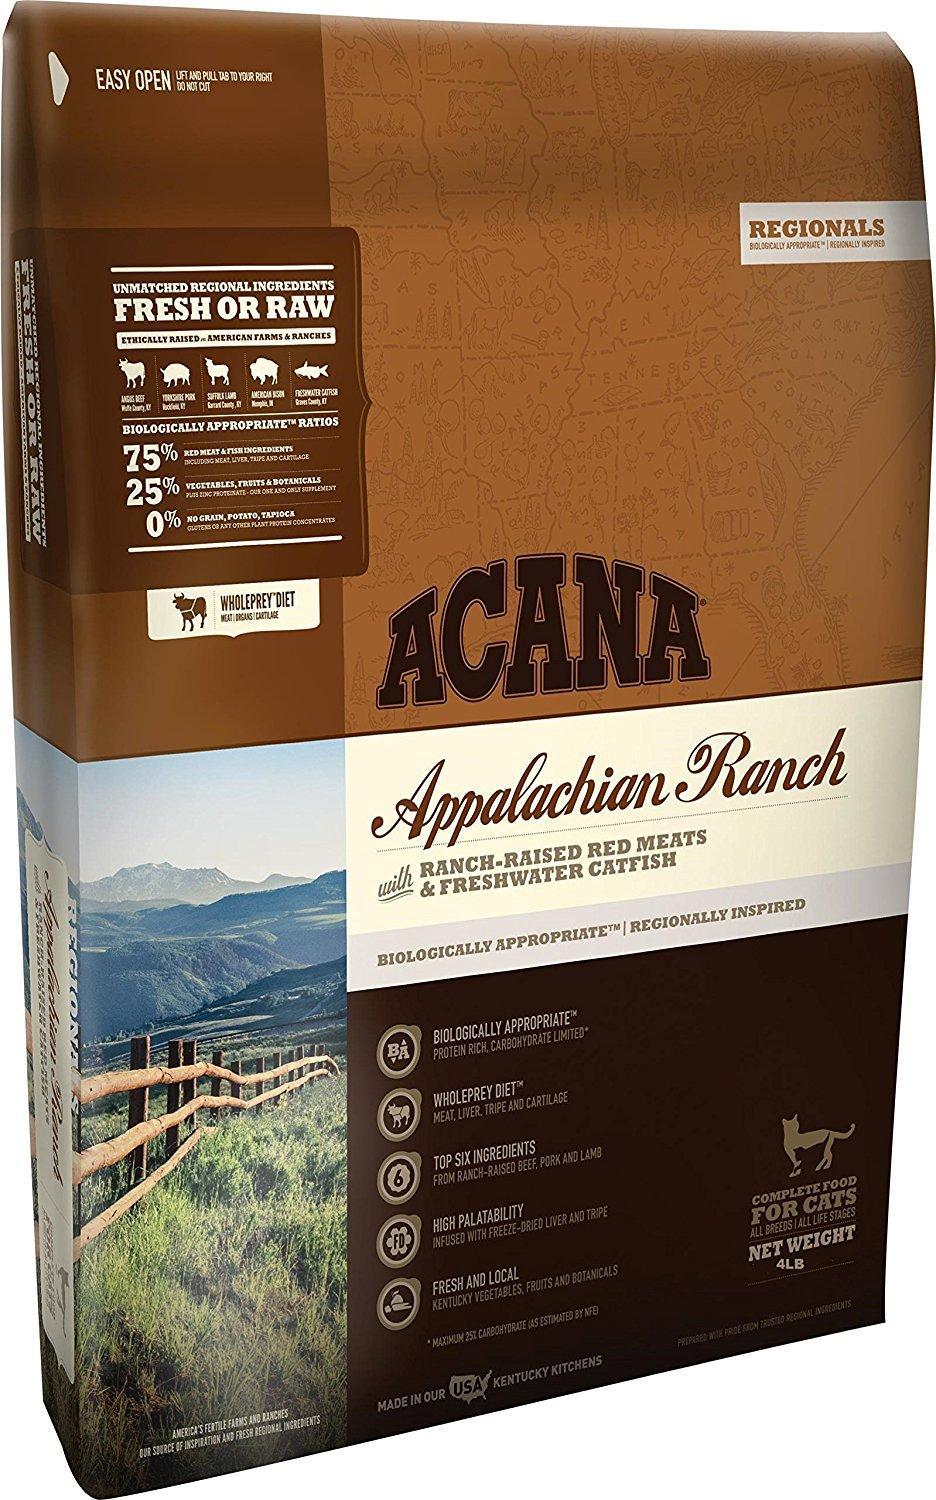 183 Appalanchian ranch beef,